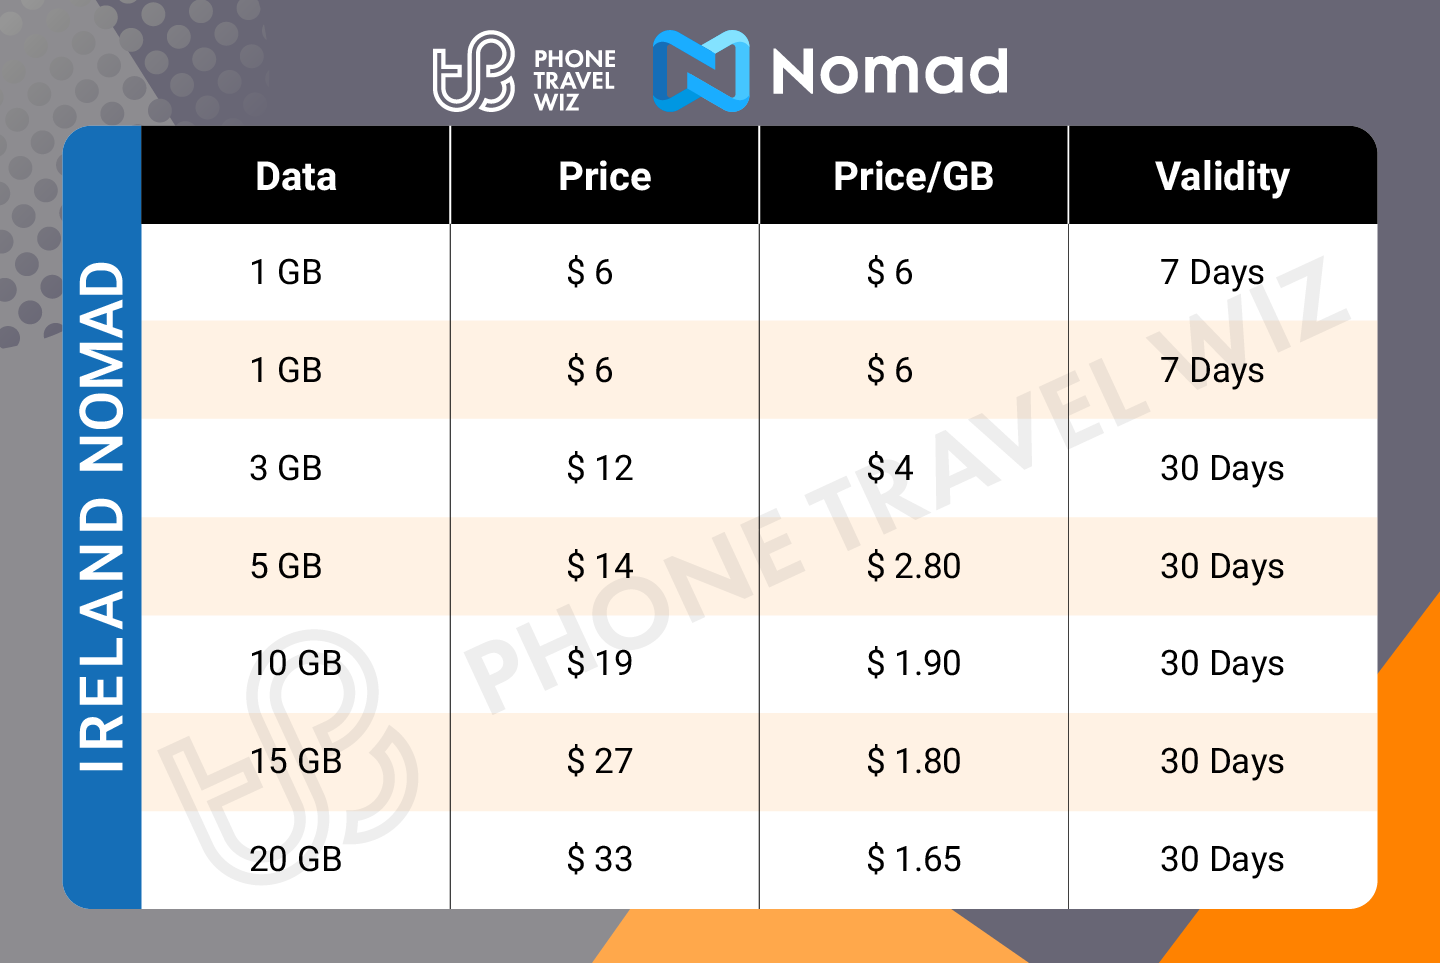 Nomad Ireland eSIM Price & Data Details Infographic by Phone Travel Wiz